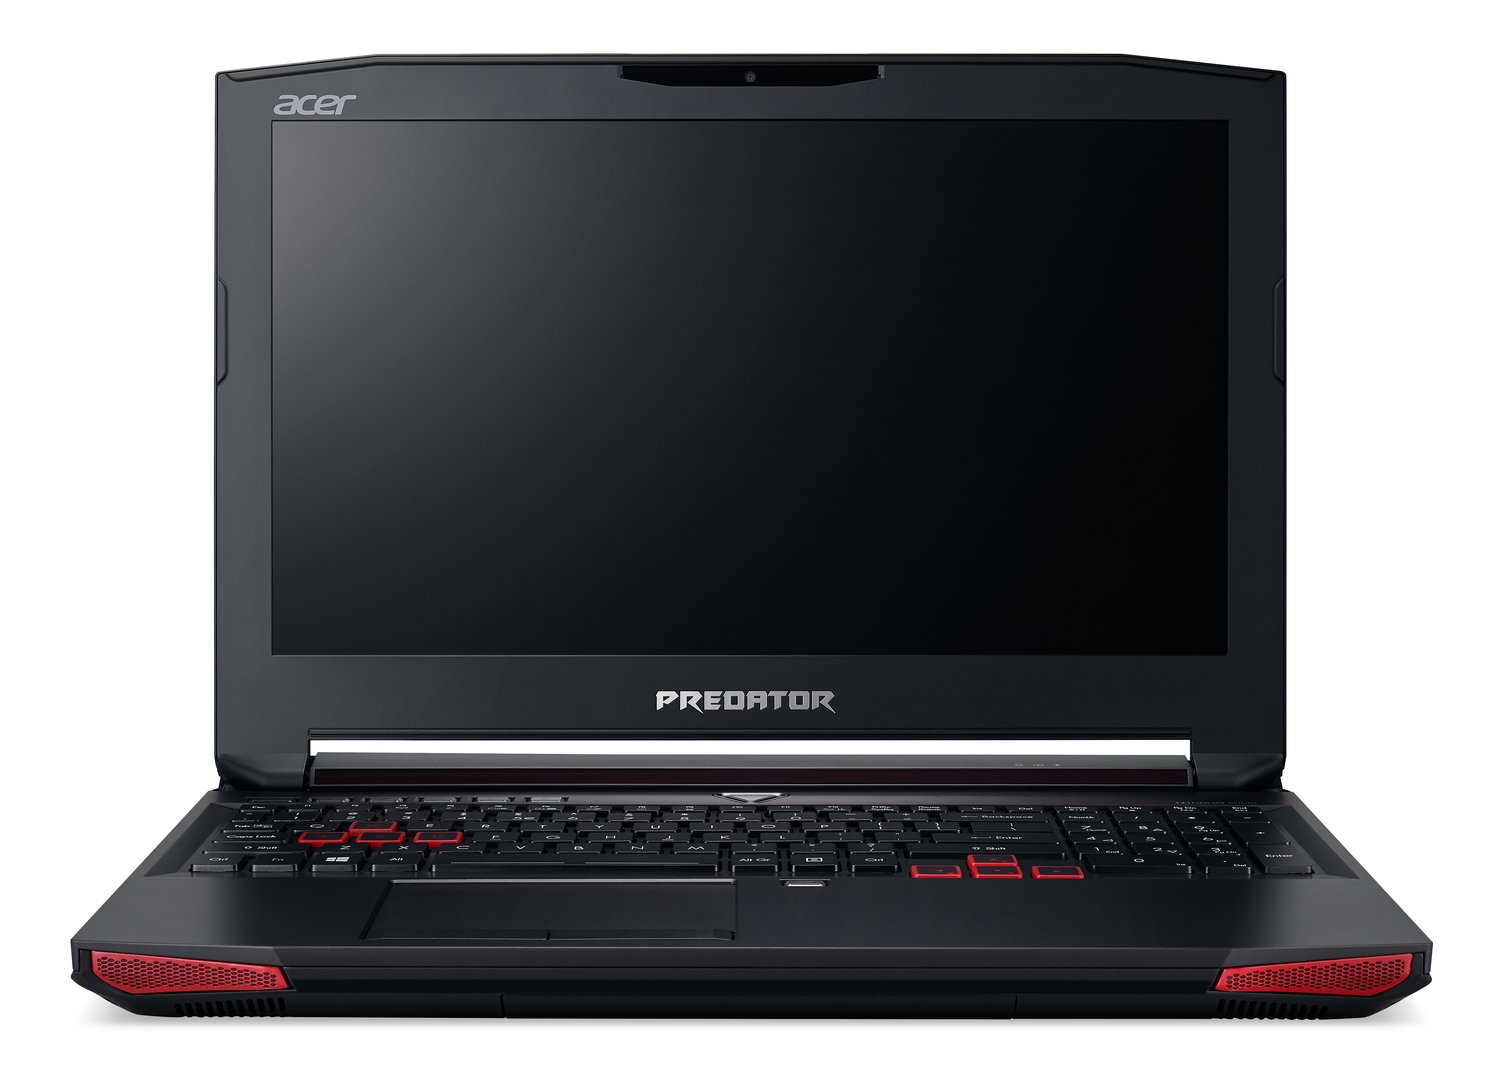 Acer Predator G9